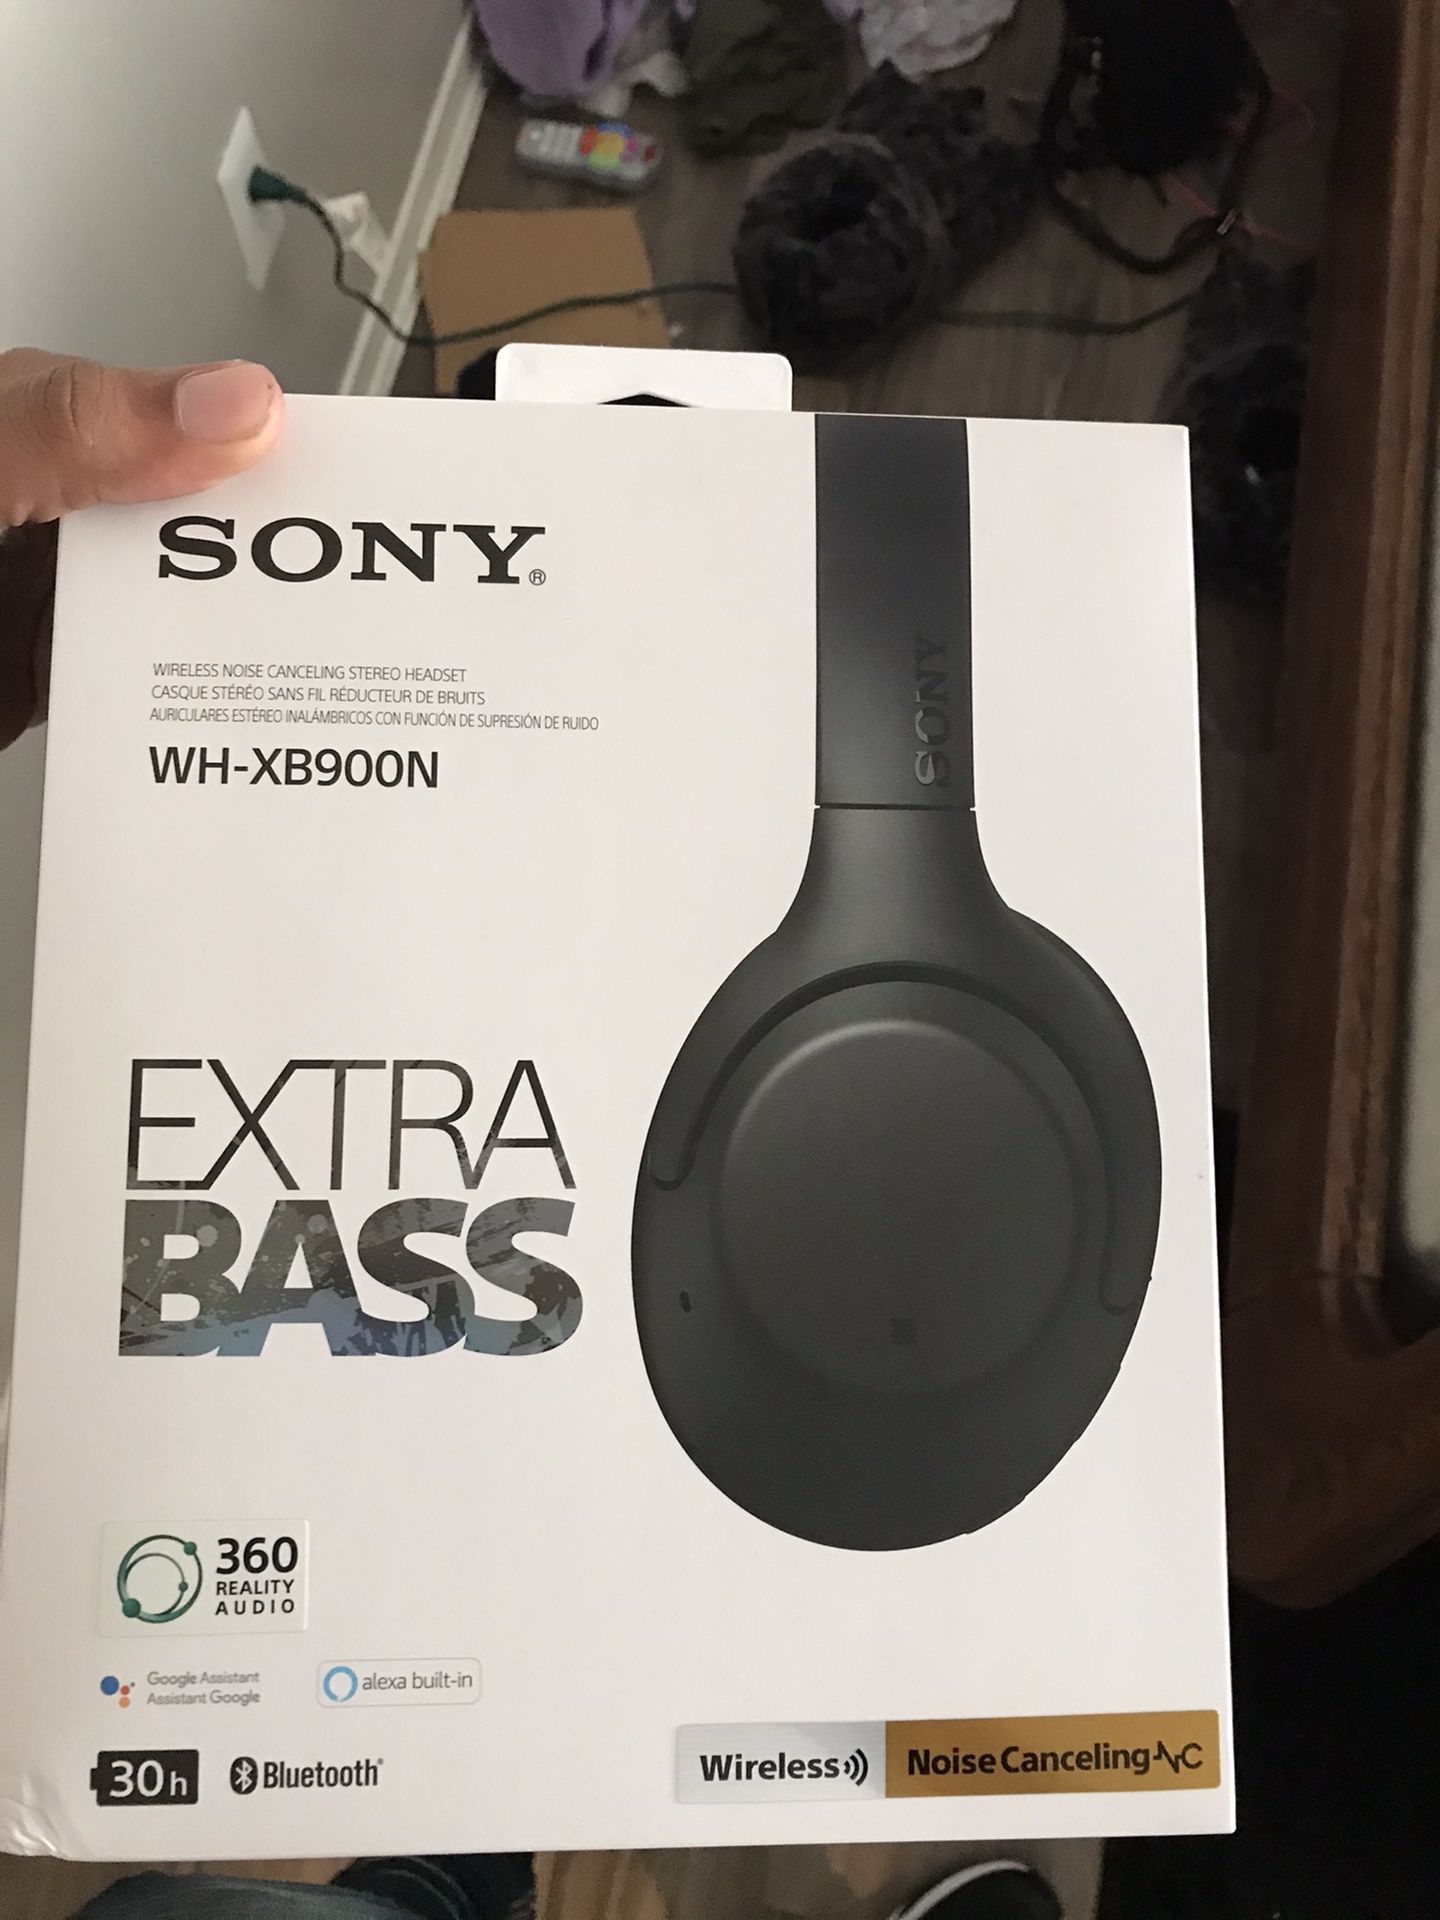 Sony WH-XB900N Extra Bass headphones